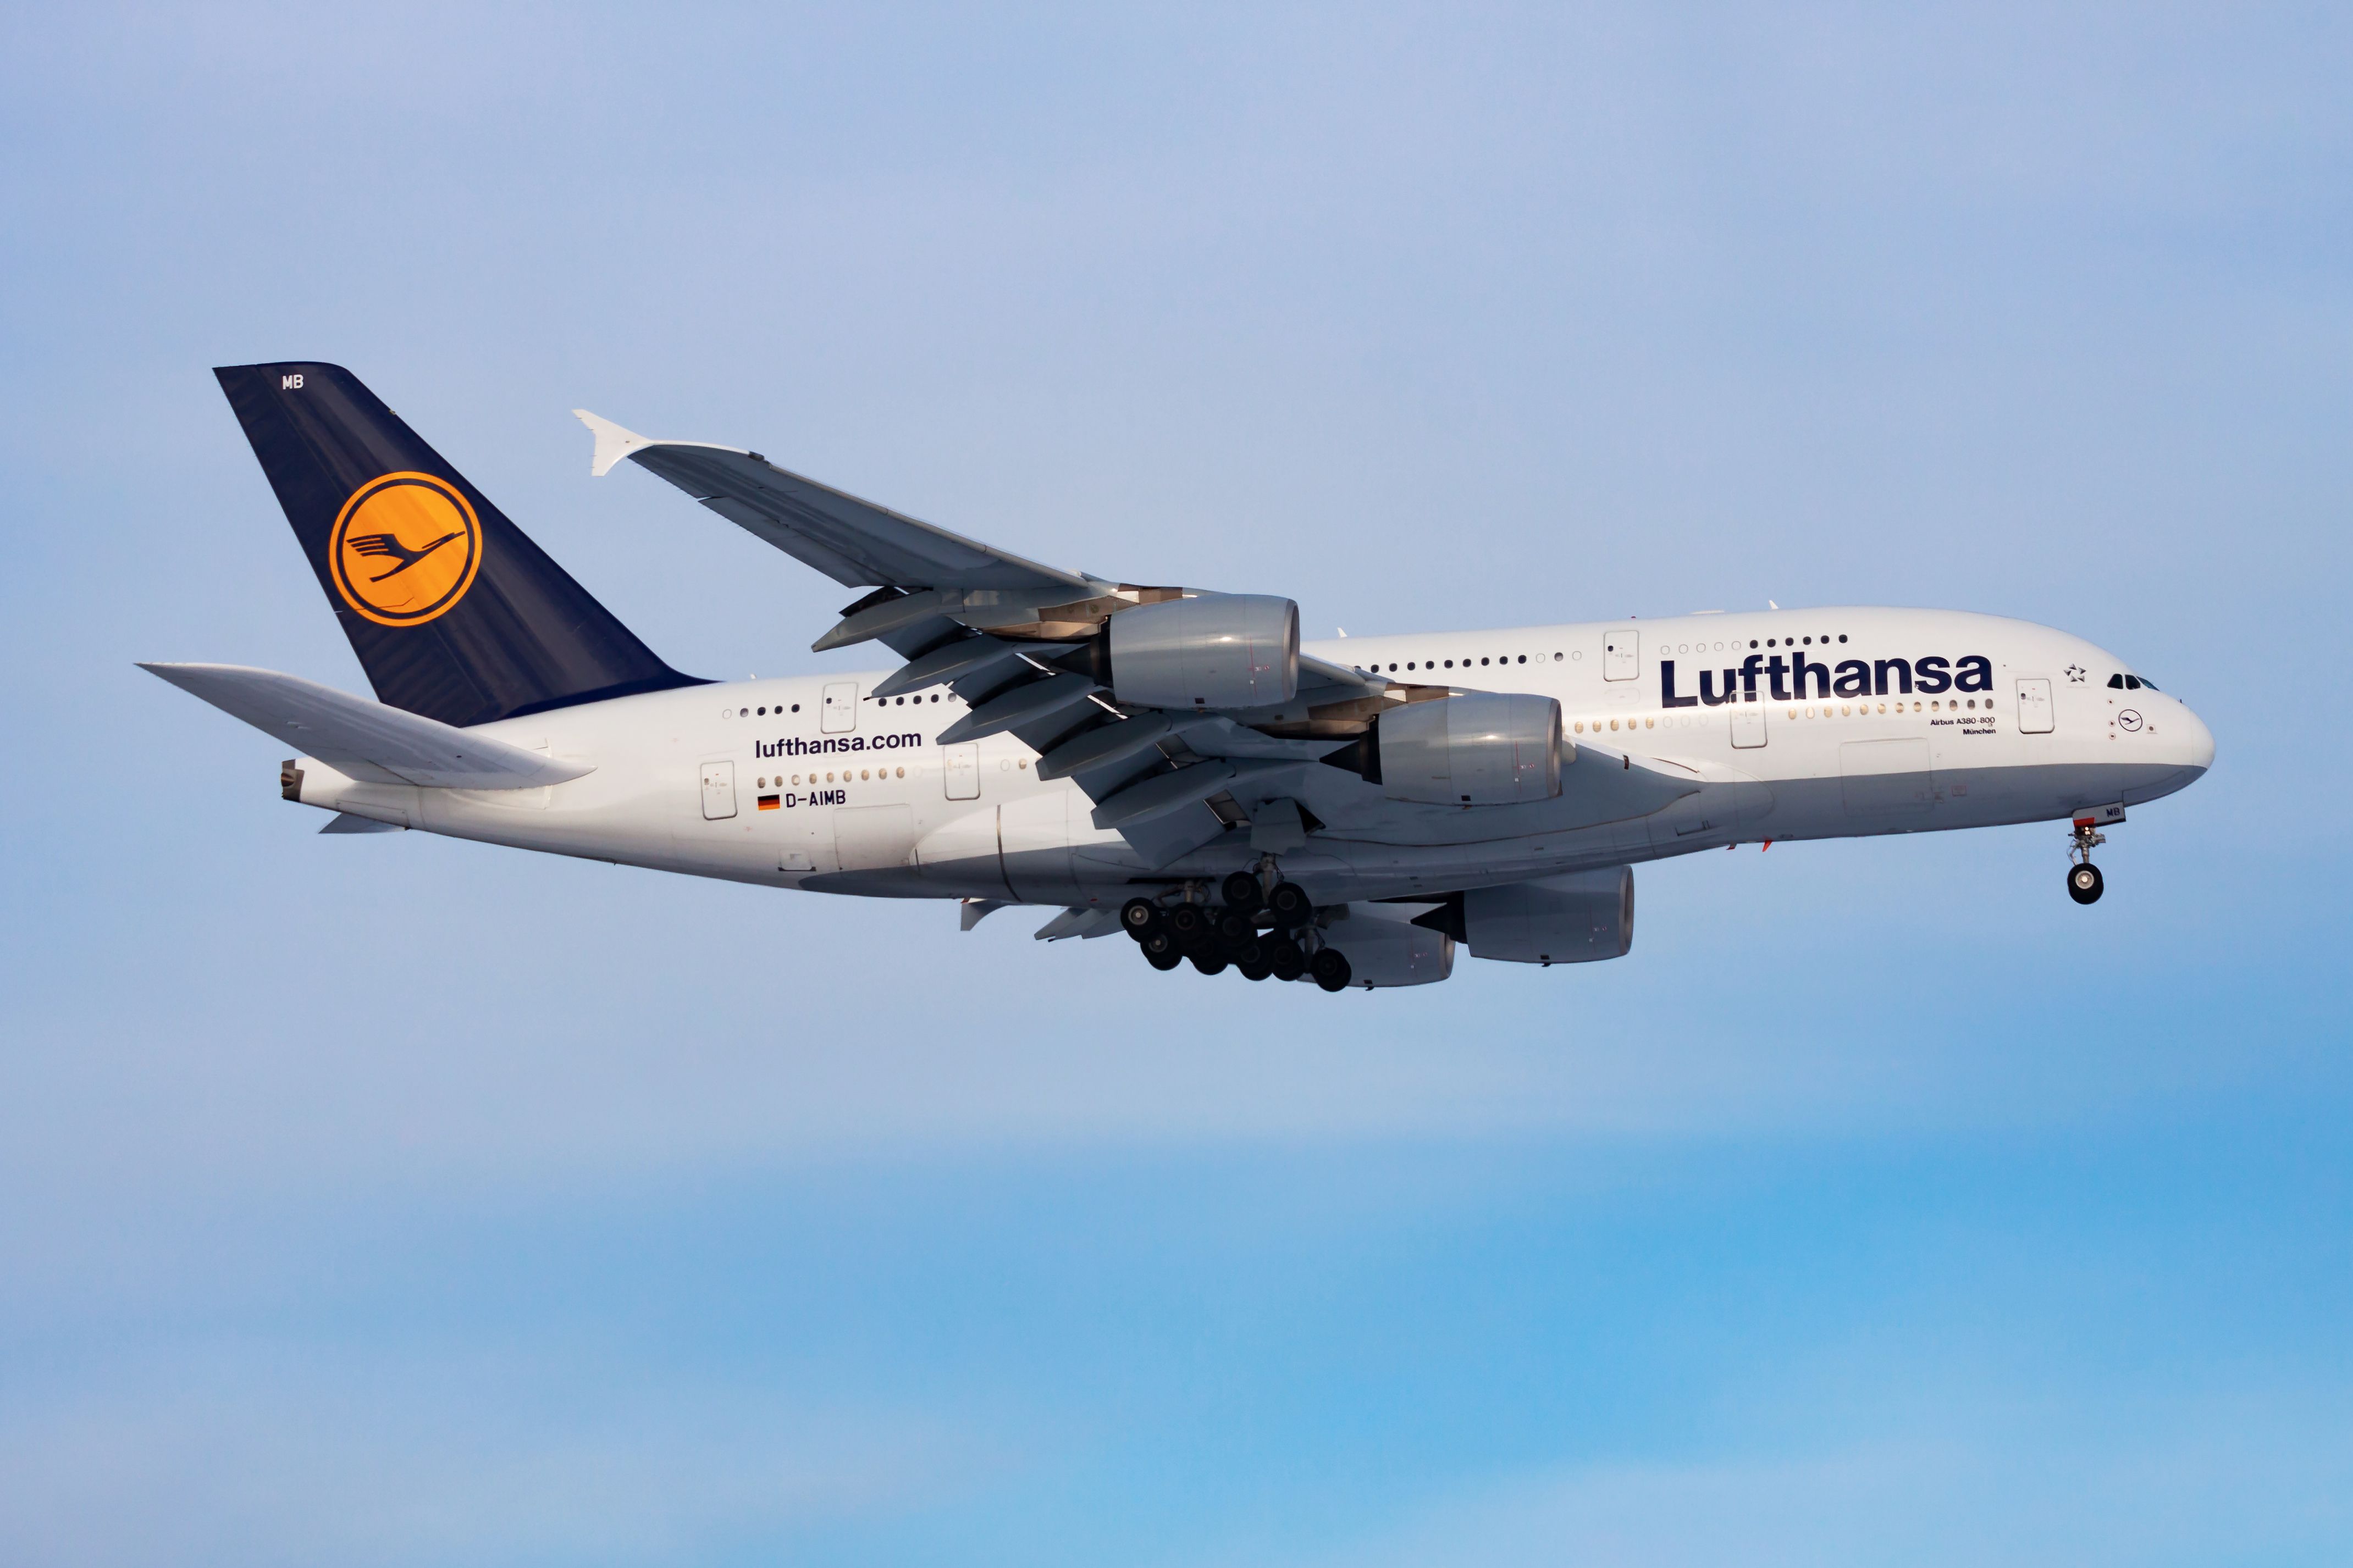 FRANKFURT / GERMANY - DECEMBER 8, 2012: Lufthansa Airbus A380 D-AIMB passenger plane landing at Frankfurt Airport